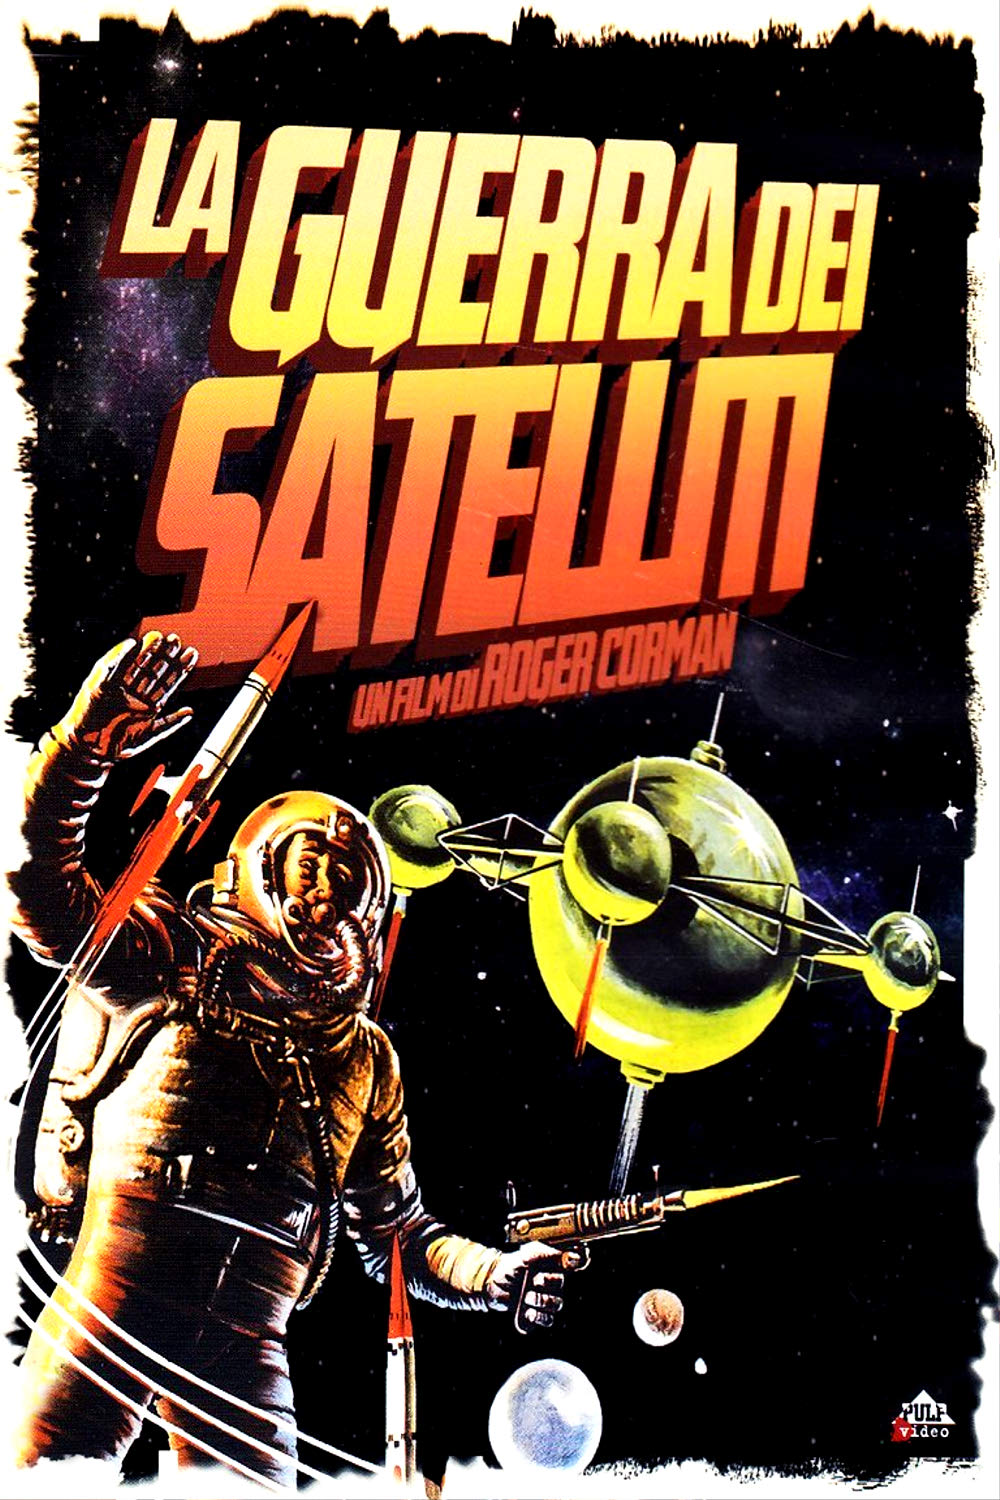 Guerra dei satelliti [B/N] [Sub-ITA] (1958)